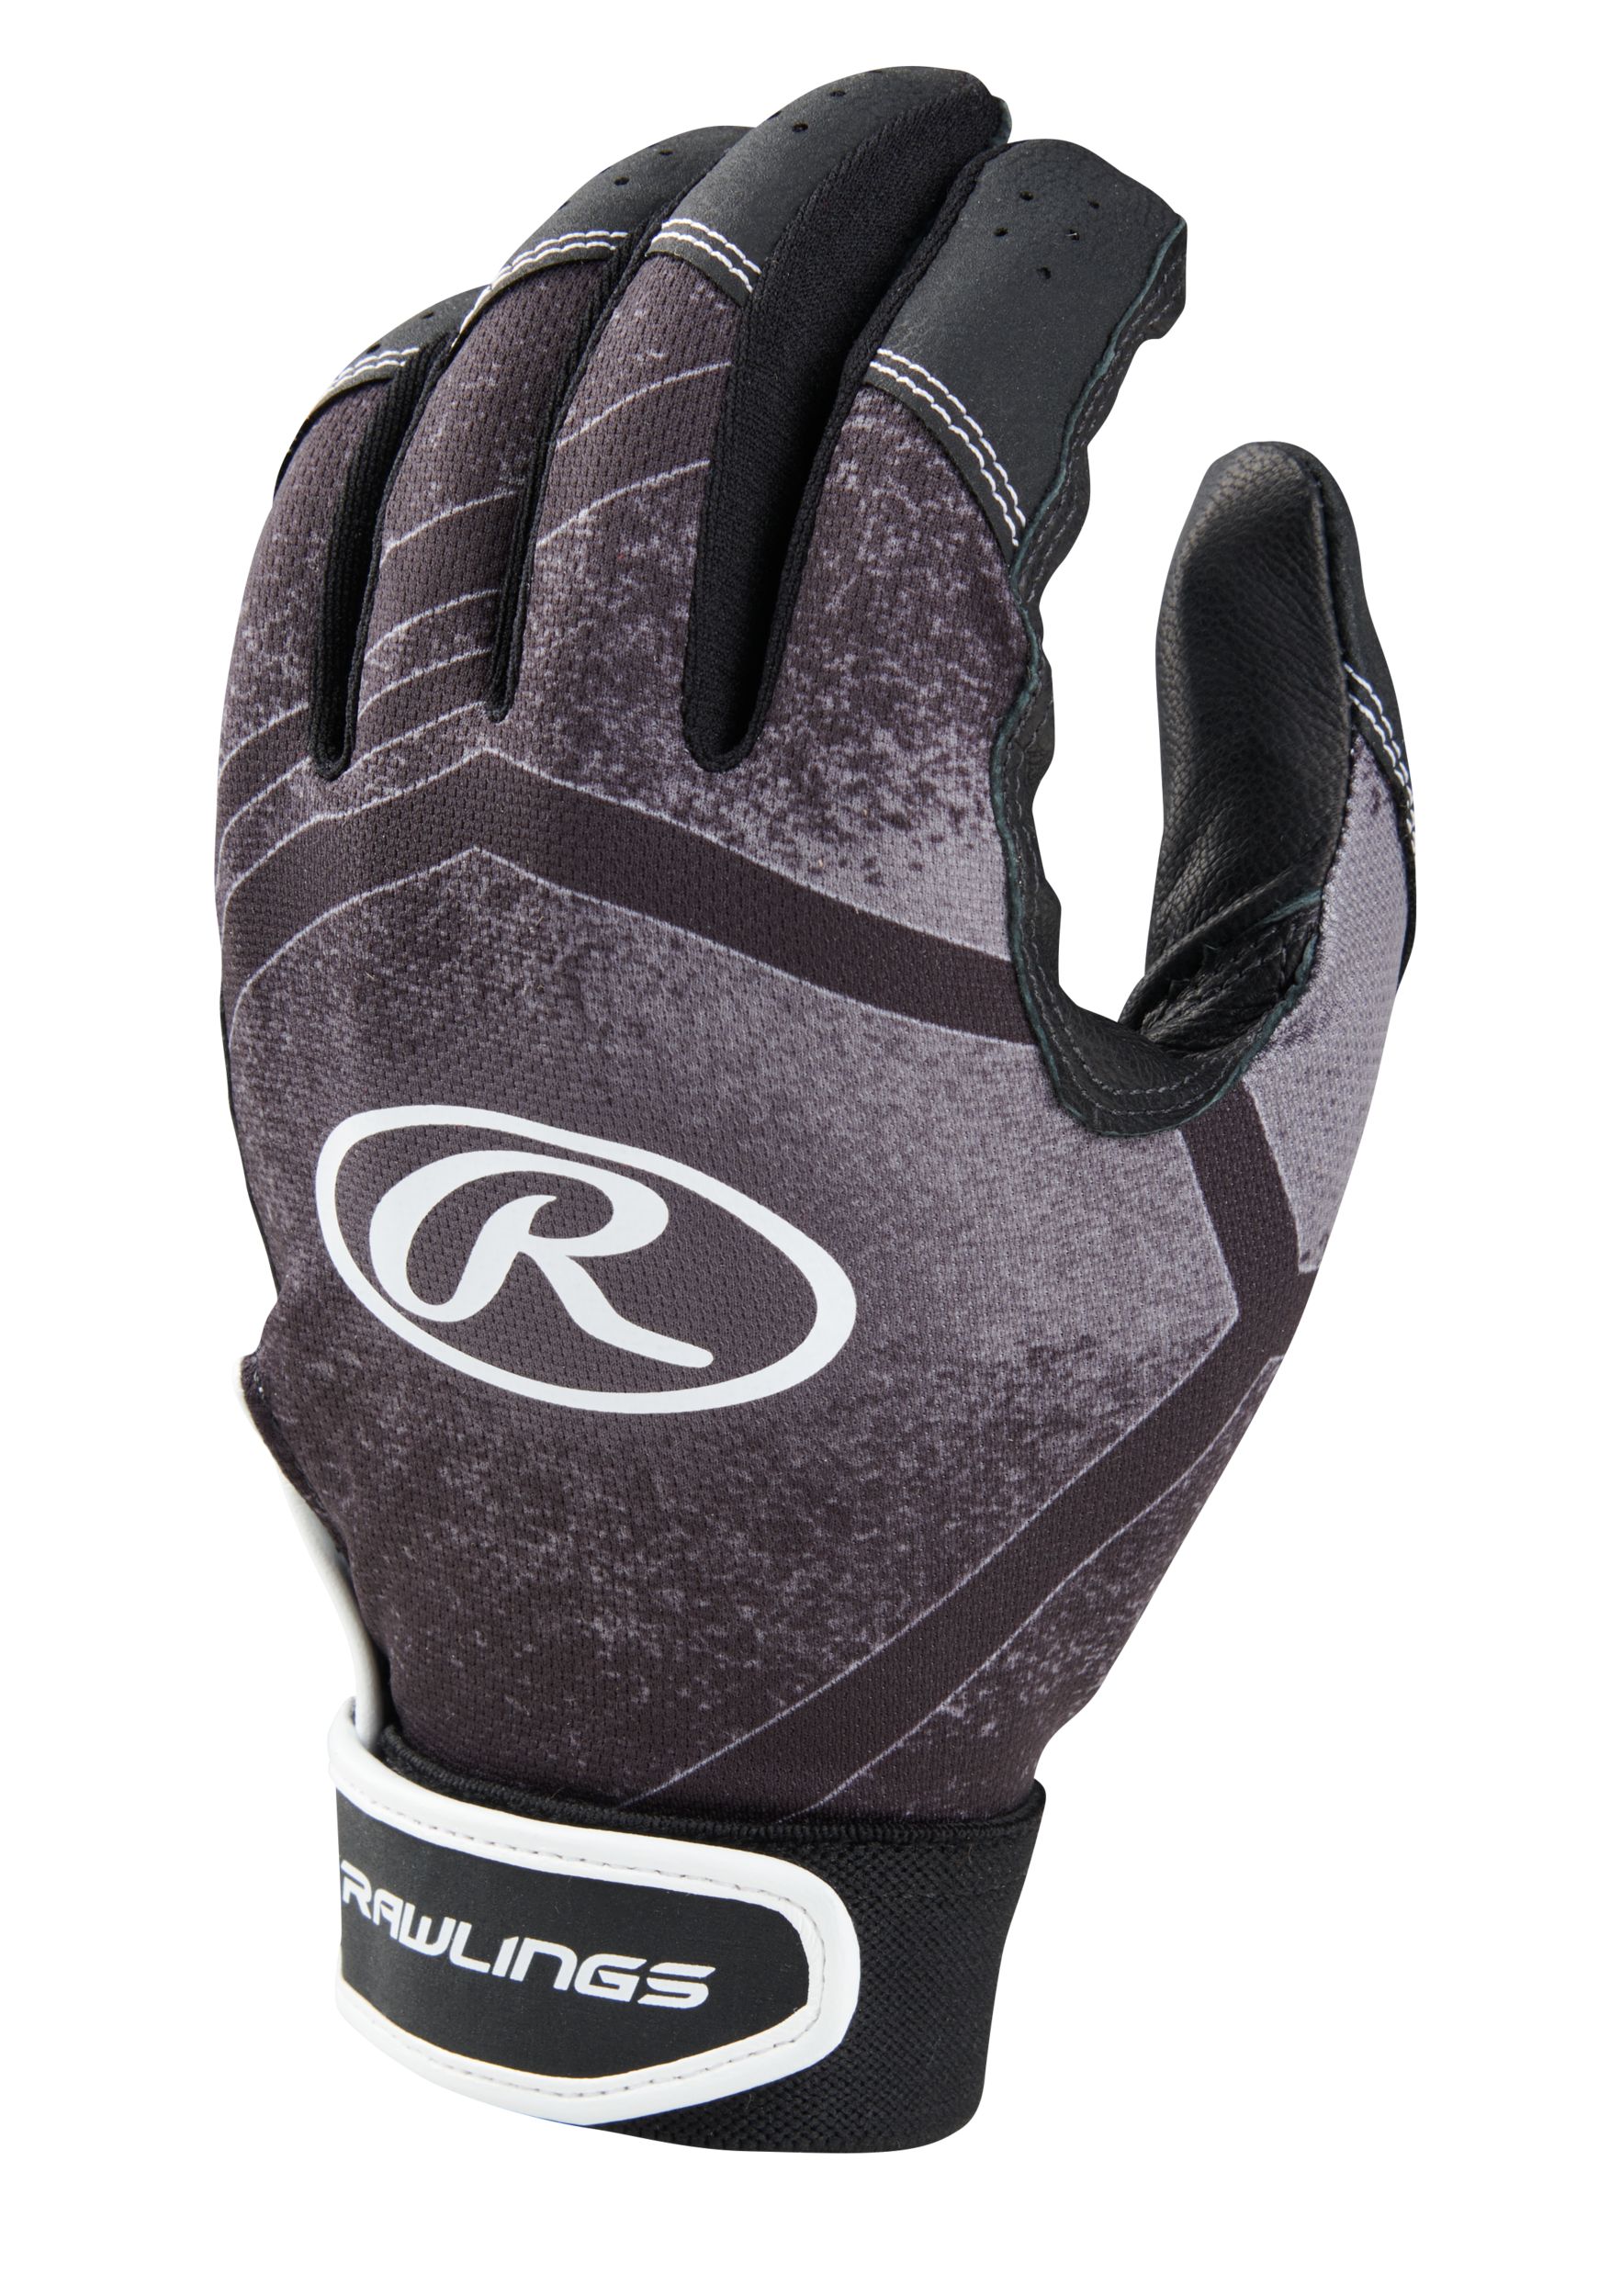 Rawlings Prodigy 3 Batting Gloves